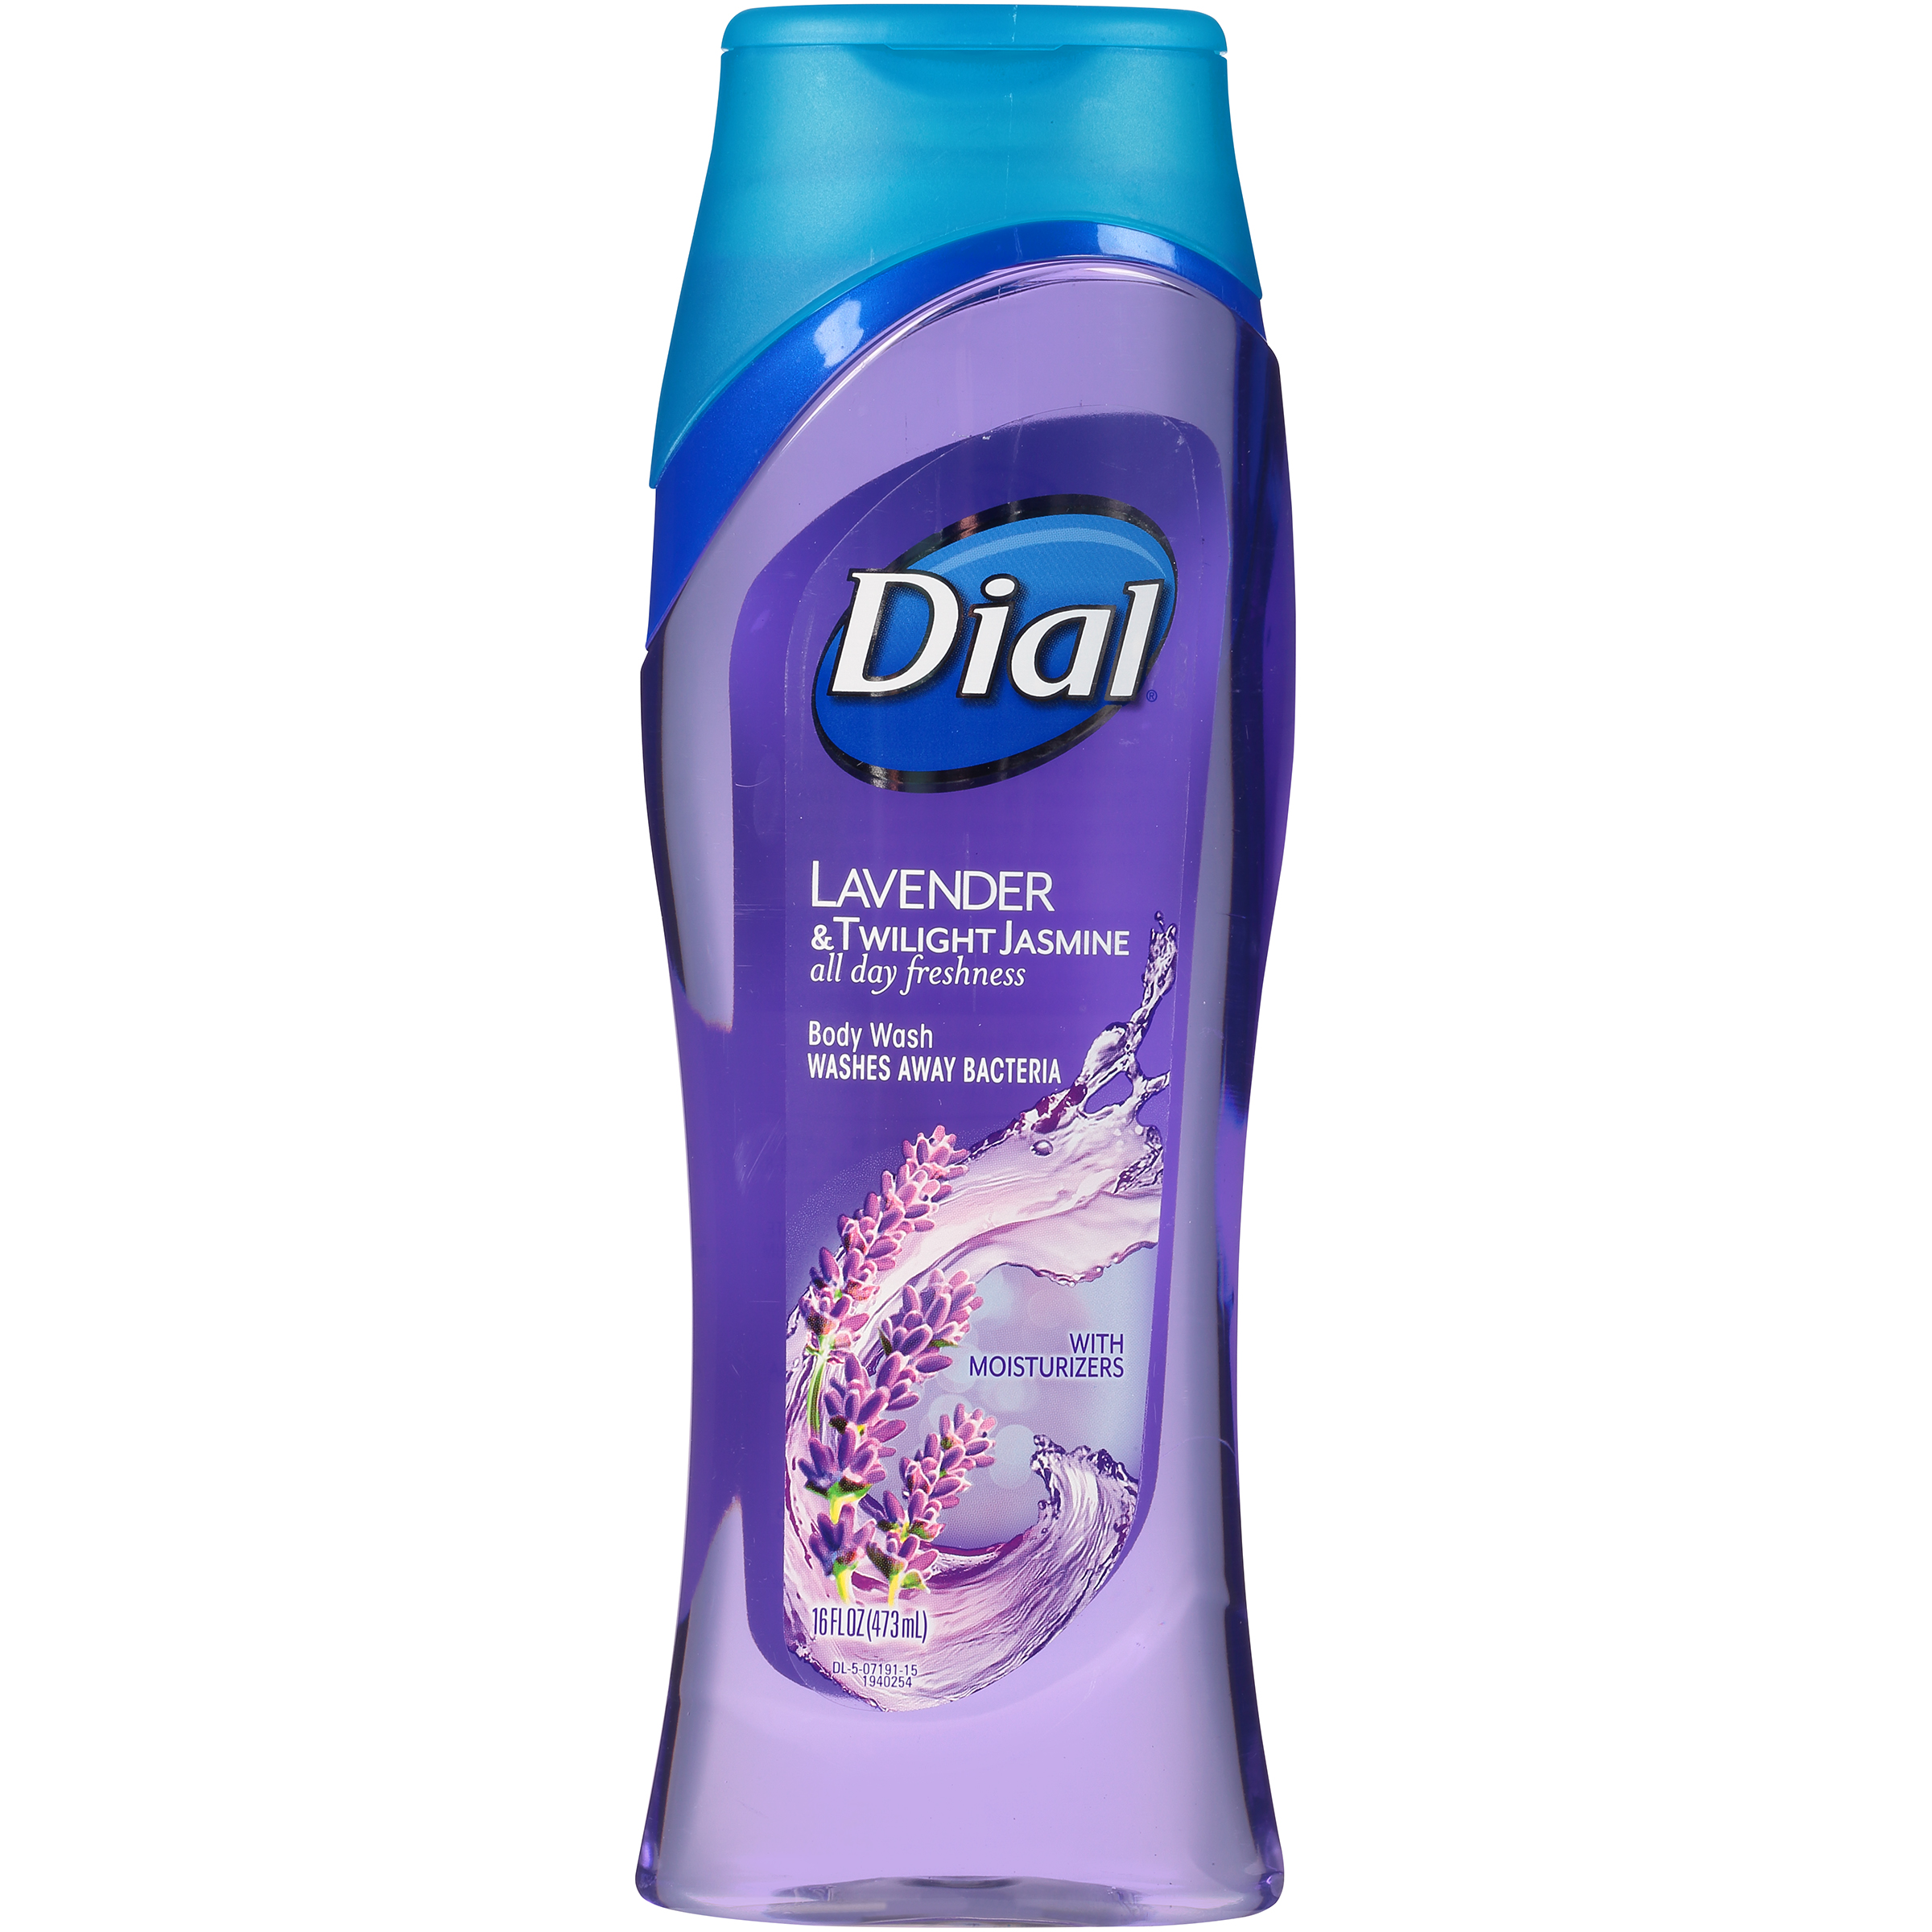 Dial Body Wash, Antibacterial with Moisturizers, Lavender & Twilight Jasmine, 18 oz.